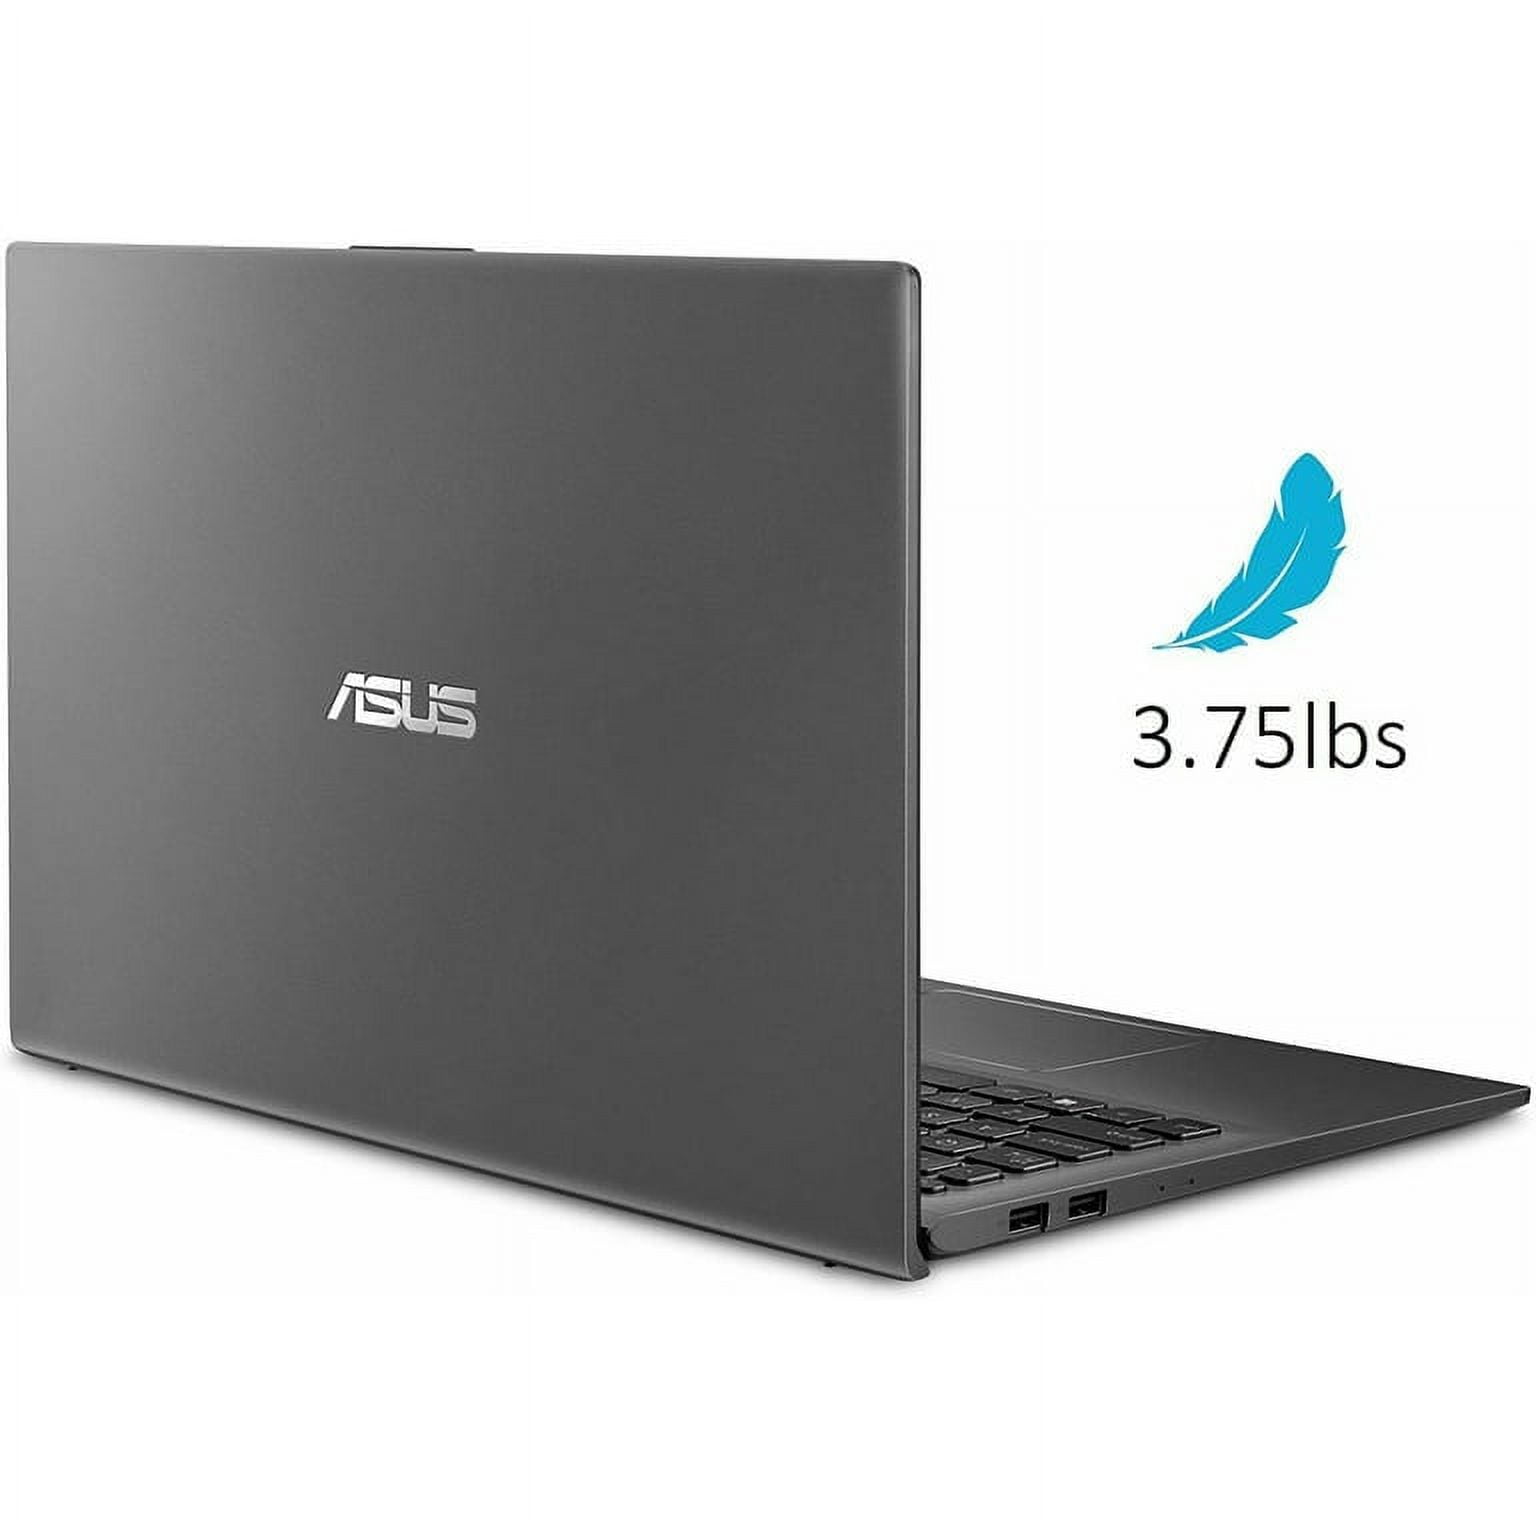 ASUS VivoBook 15 Thin and Light Laptop, 15.6” FHD Display, Intel